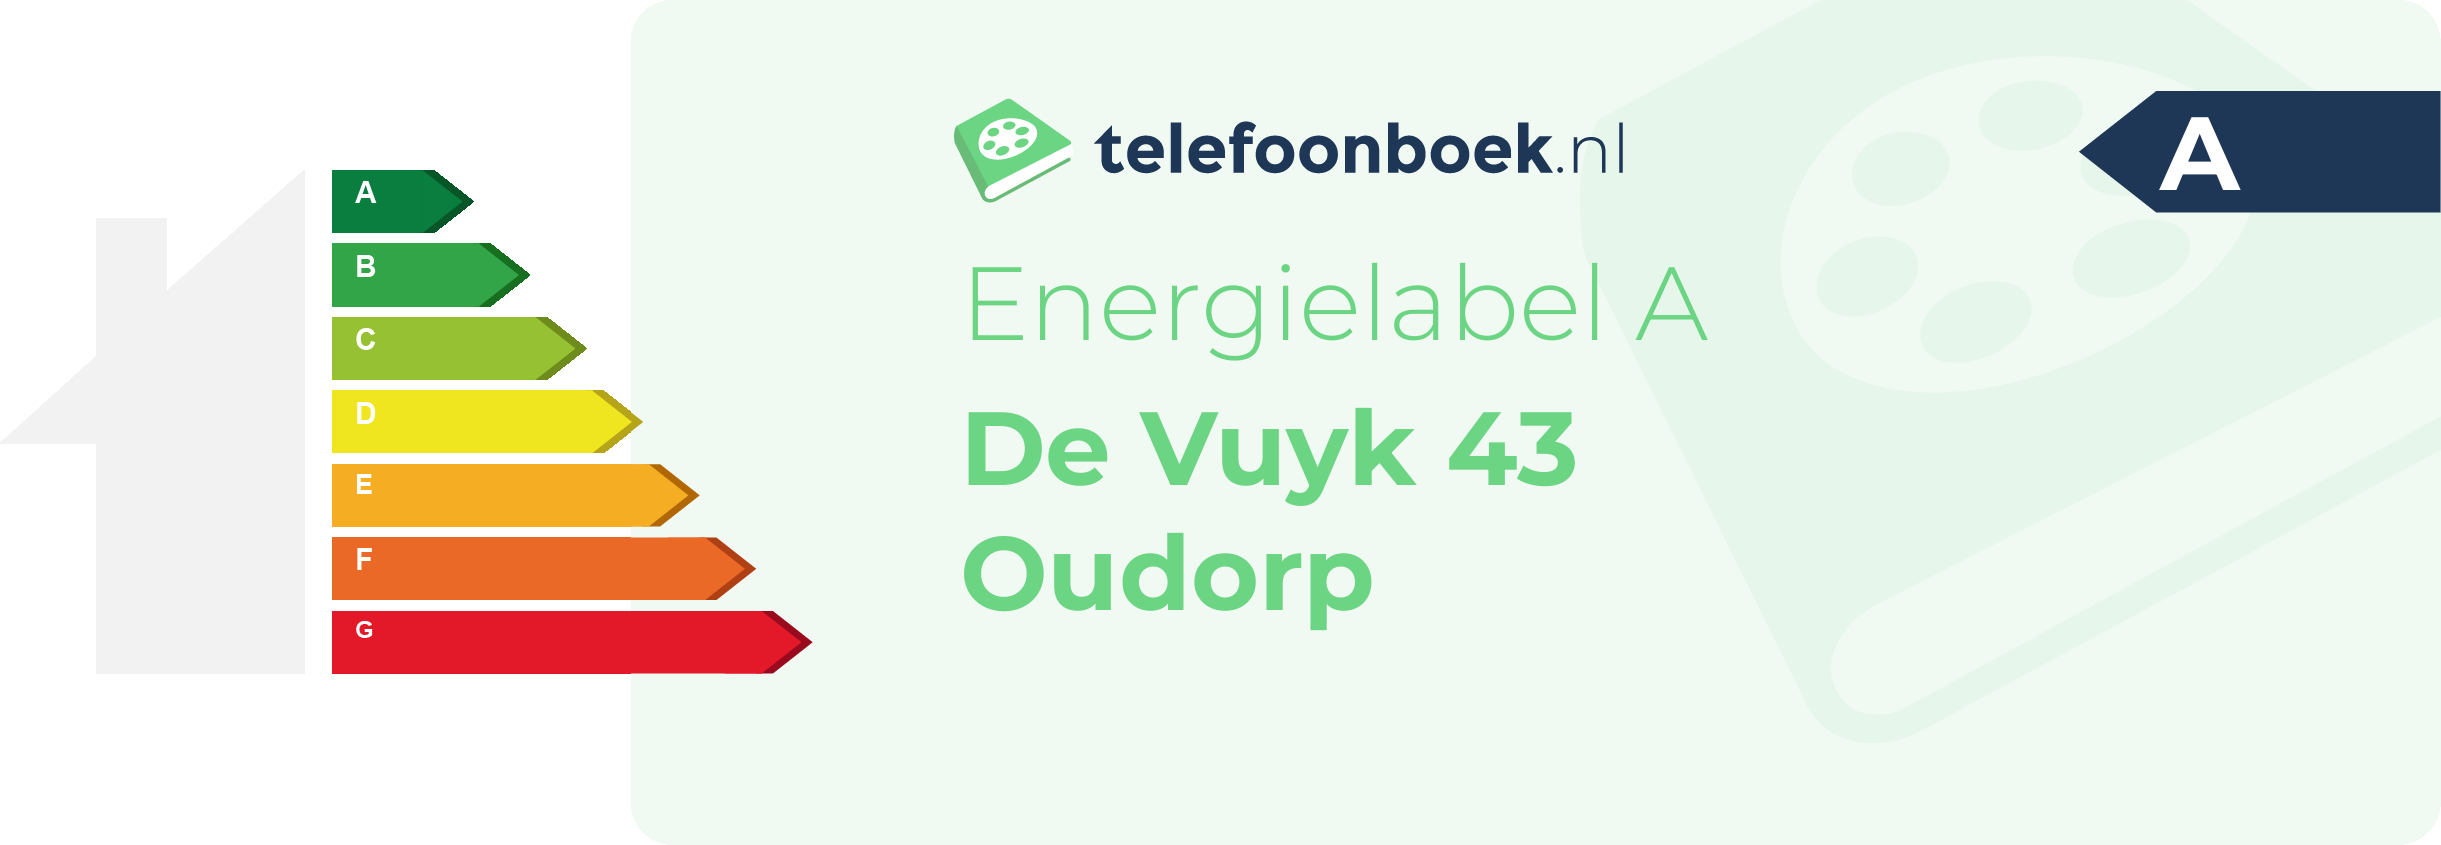 Energielabel De Vuyk 43 Oudorp